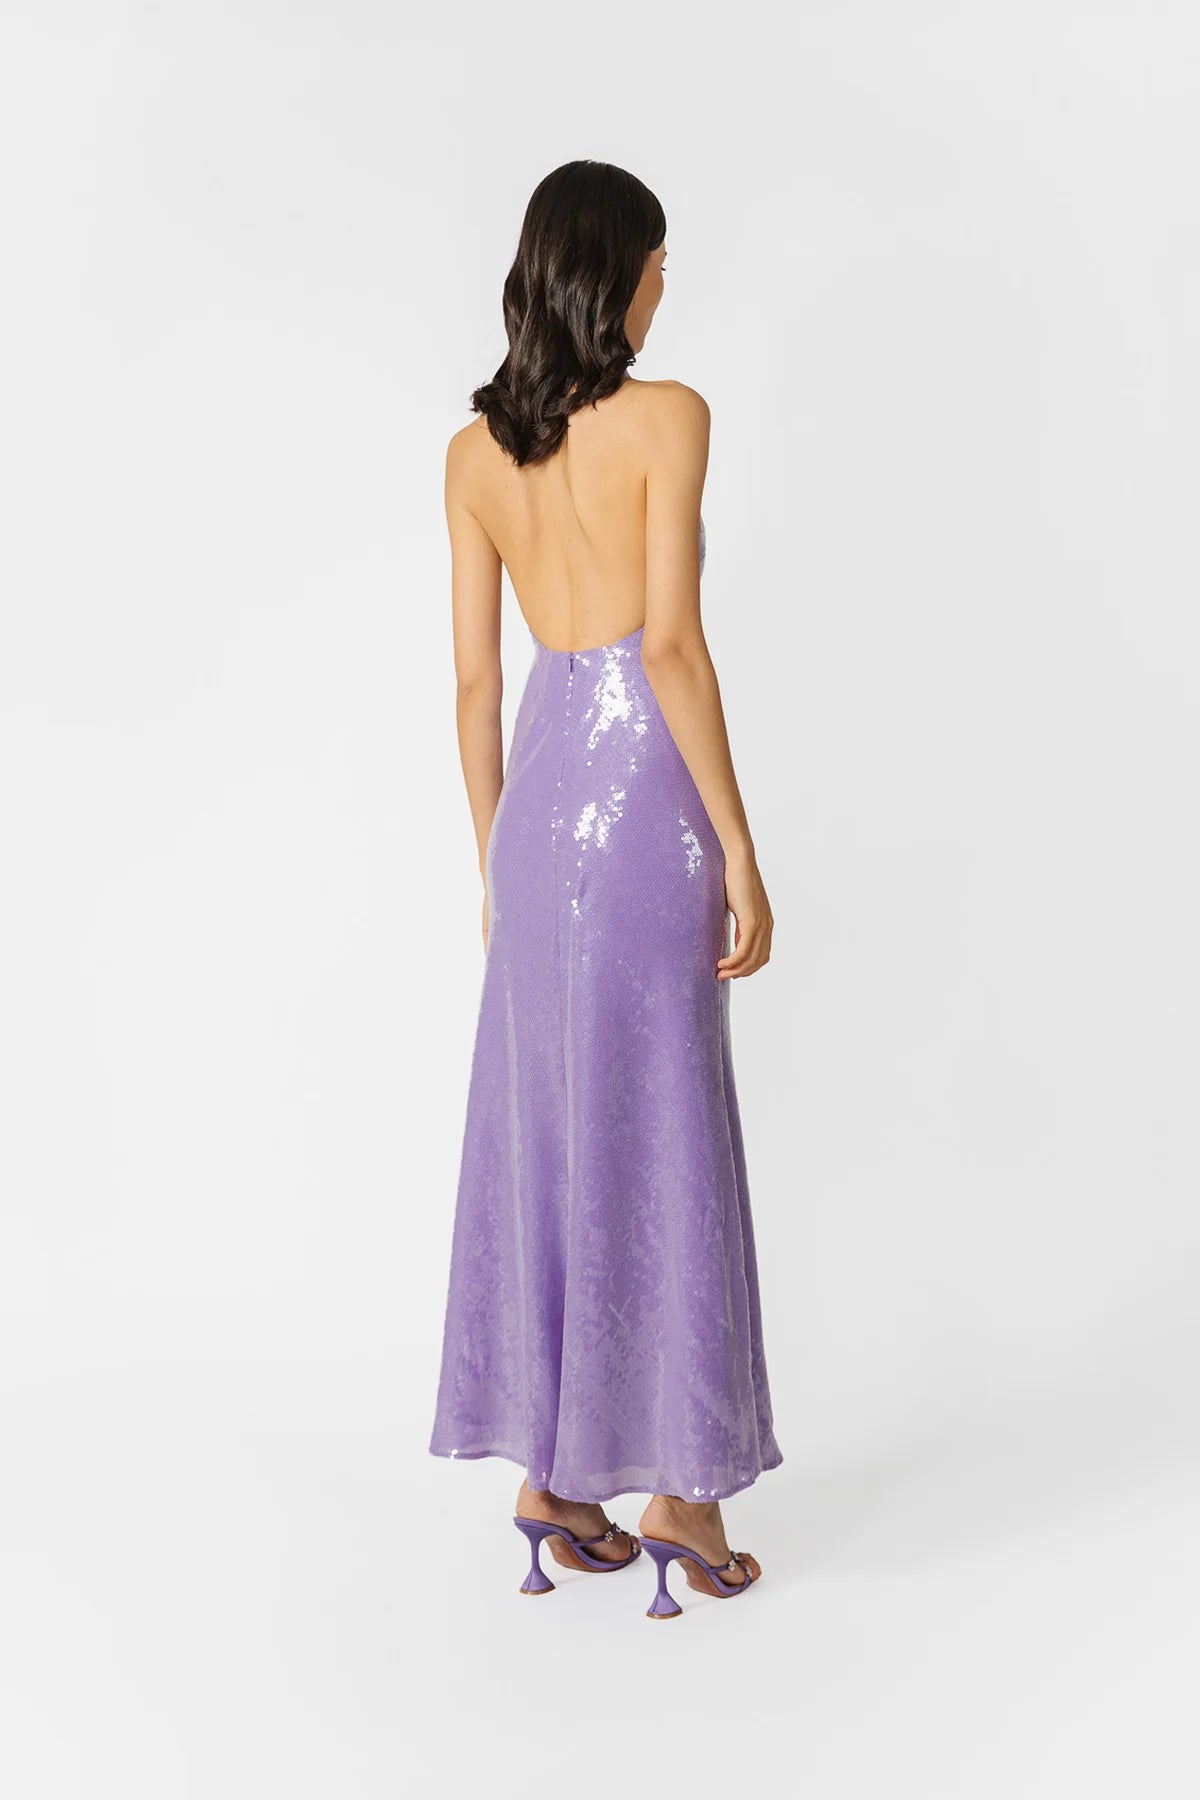 Ophelia Sequined Dress